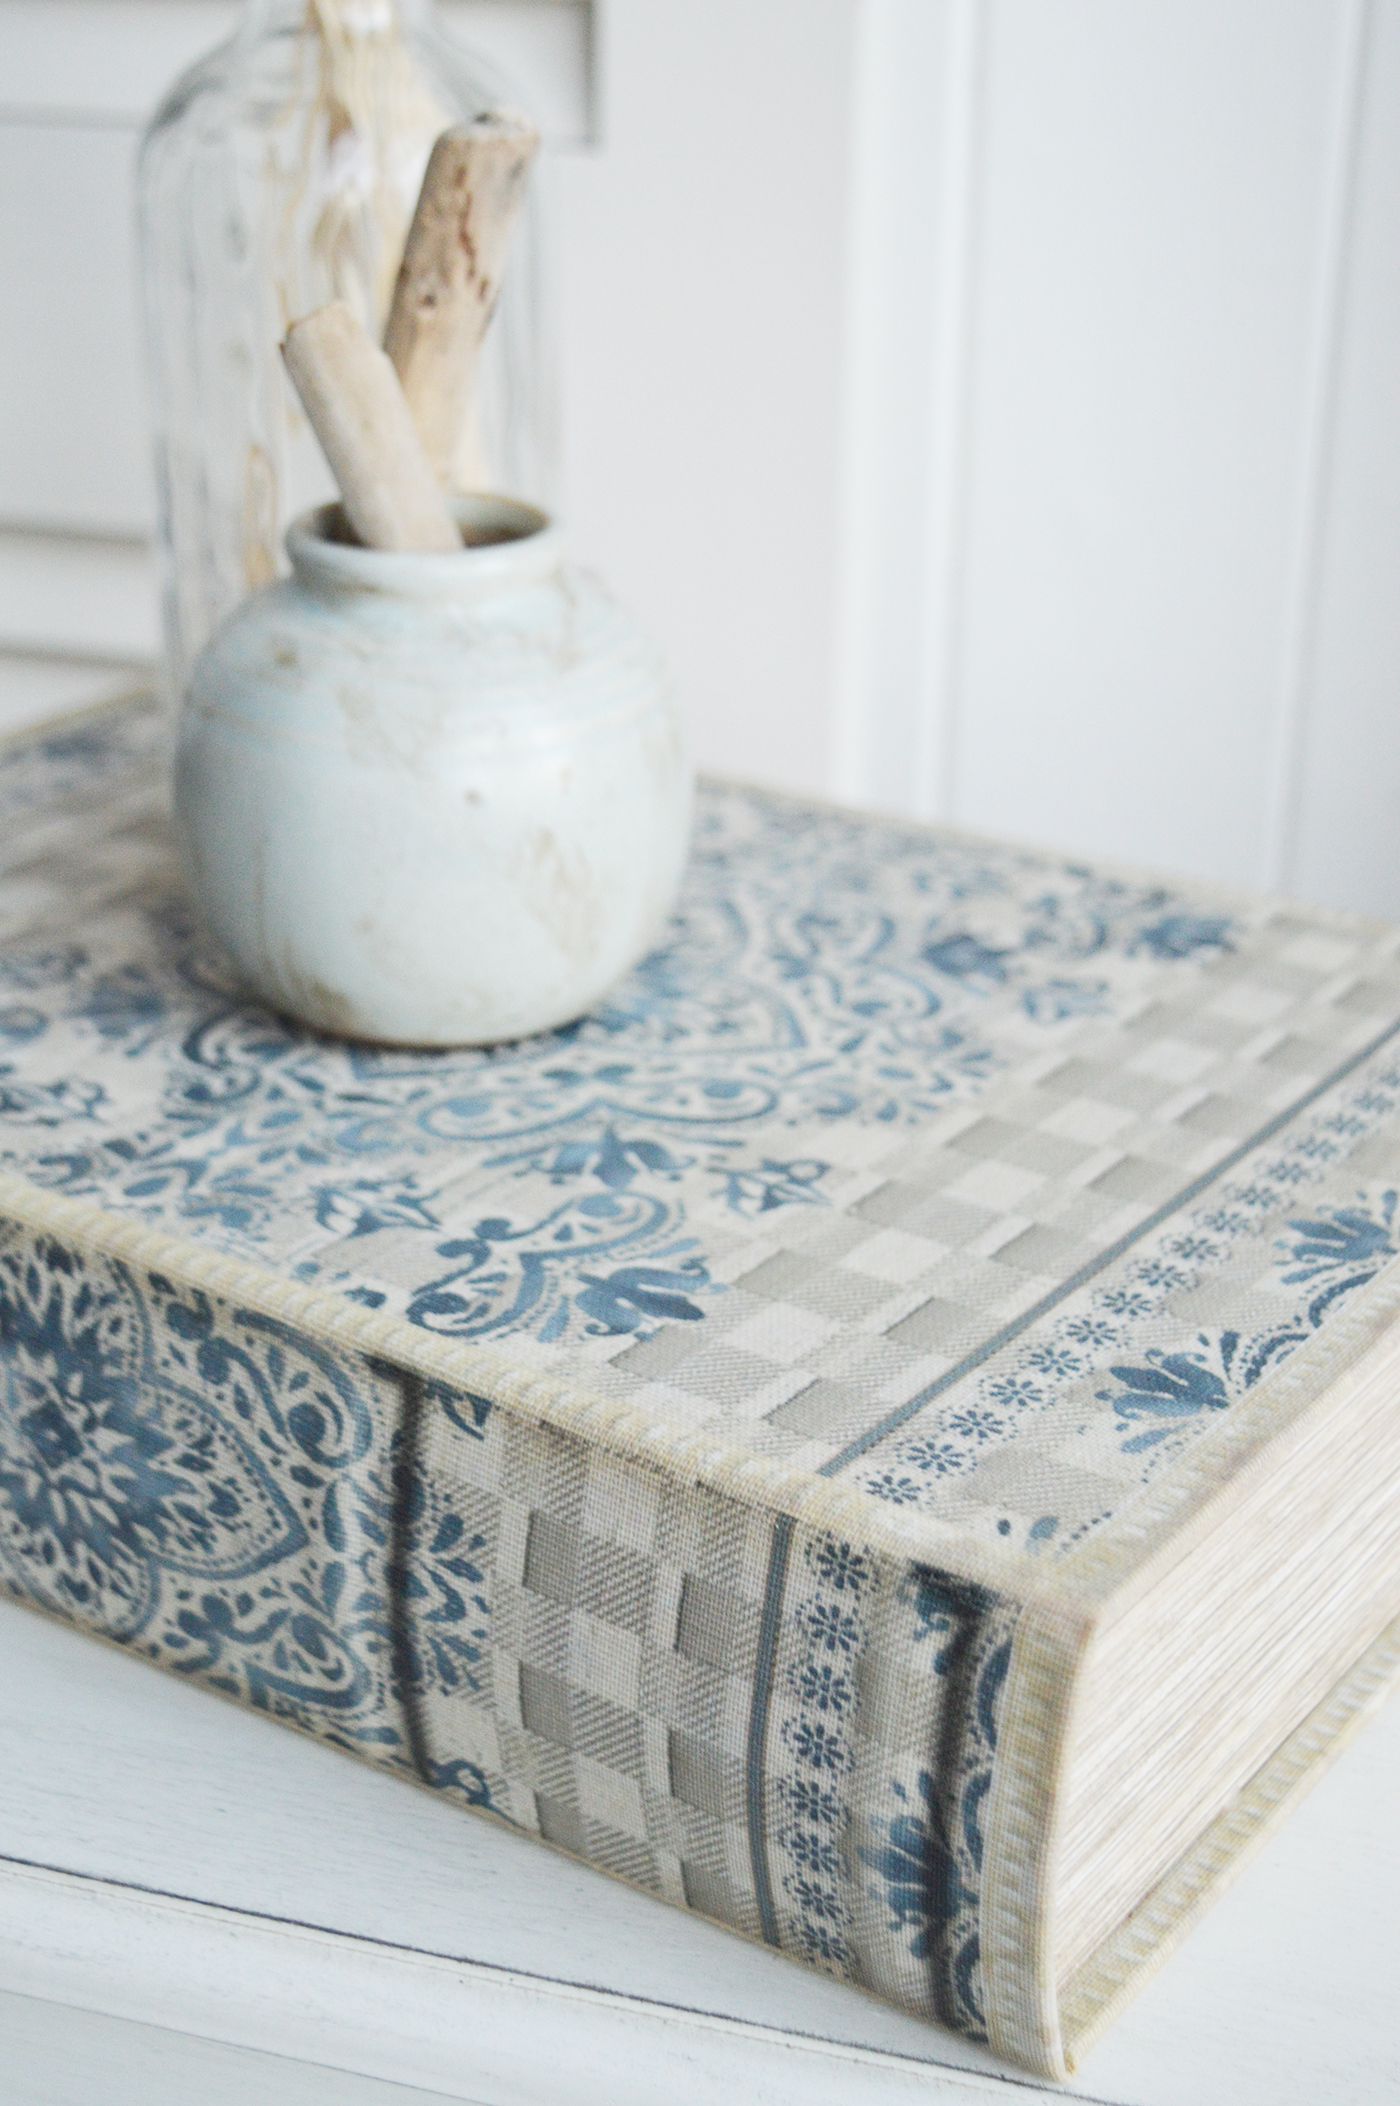 Blue and grey decorative storage book for New England, city Country and coastal home interior decor